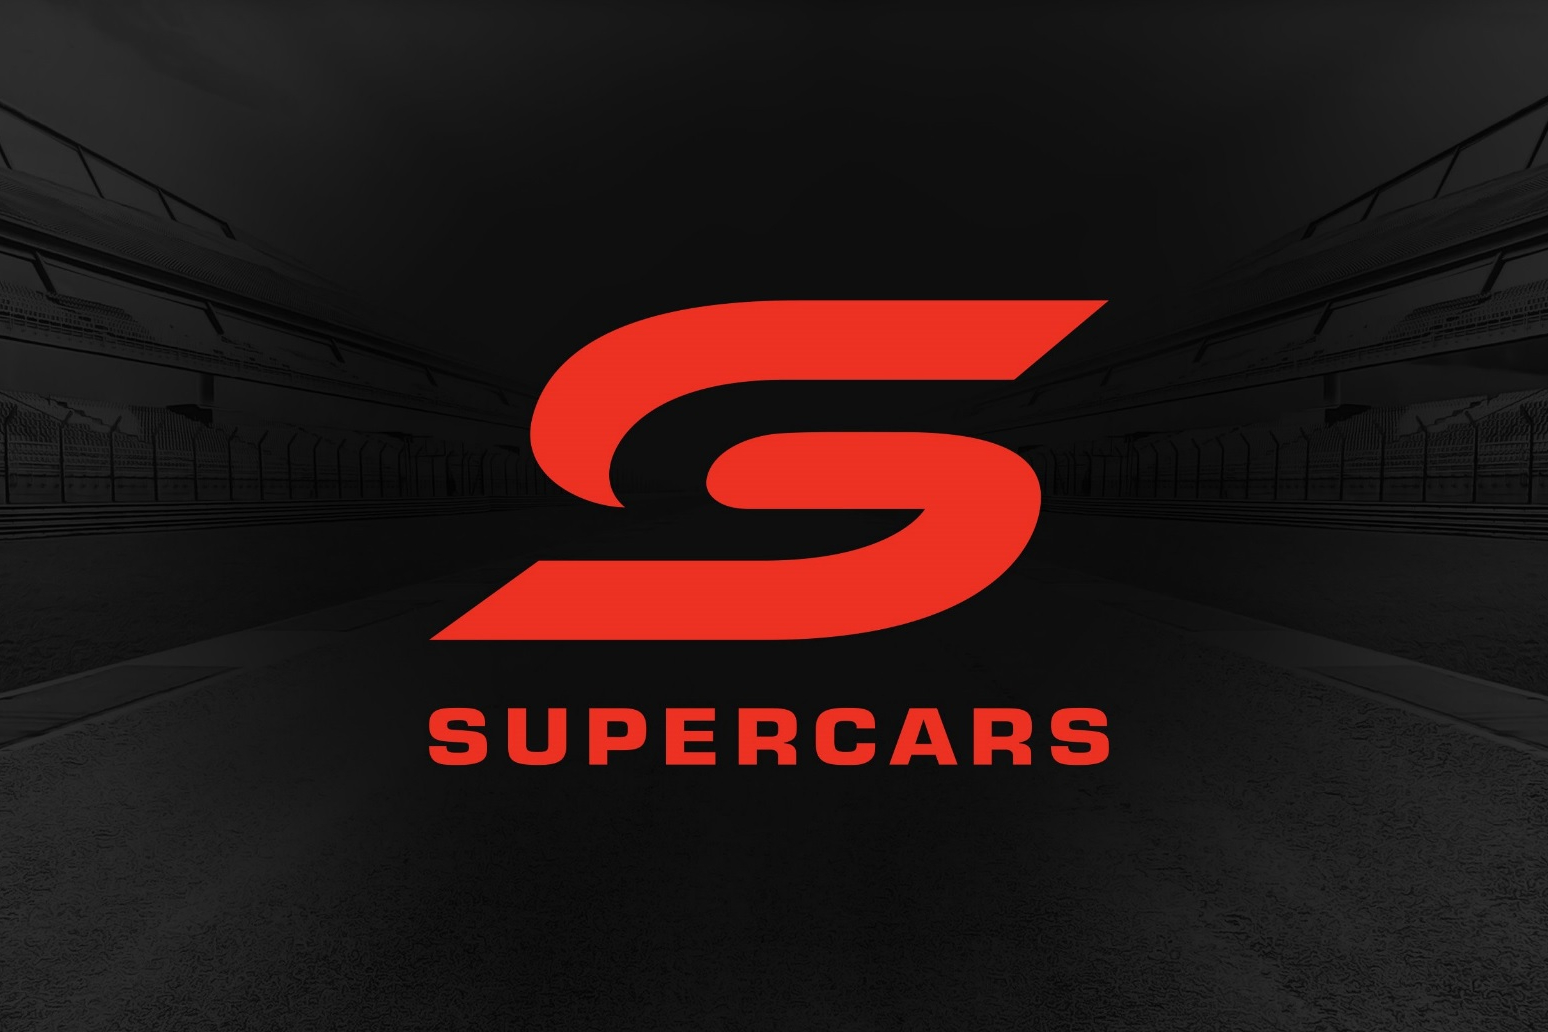 www.supercars.com